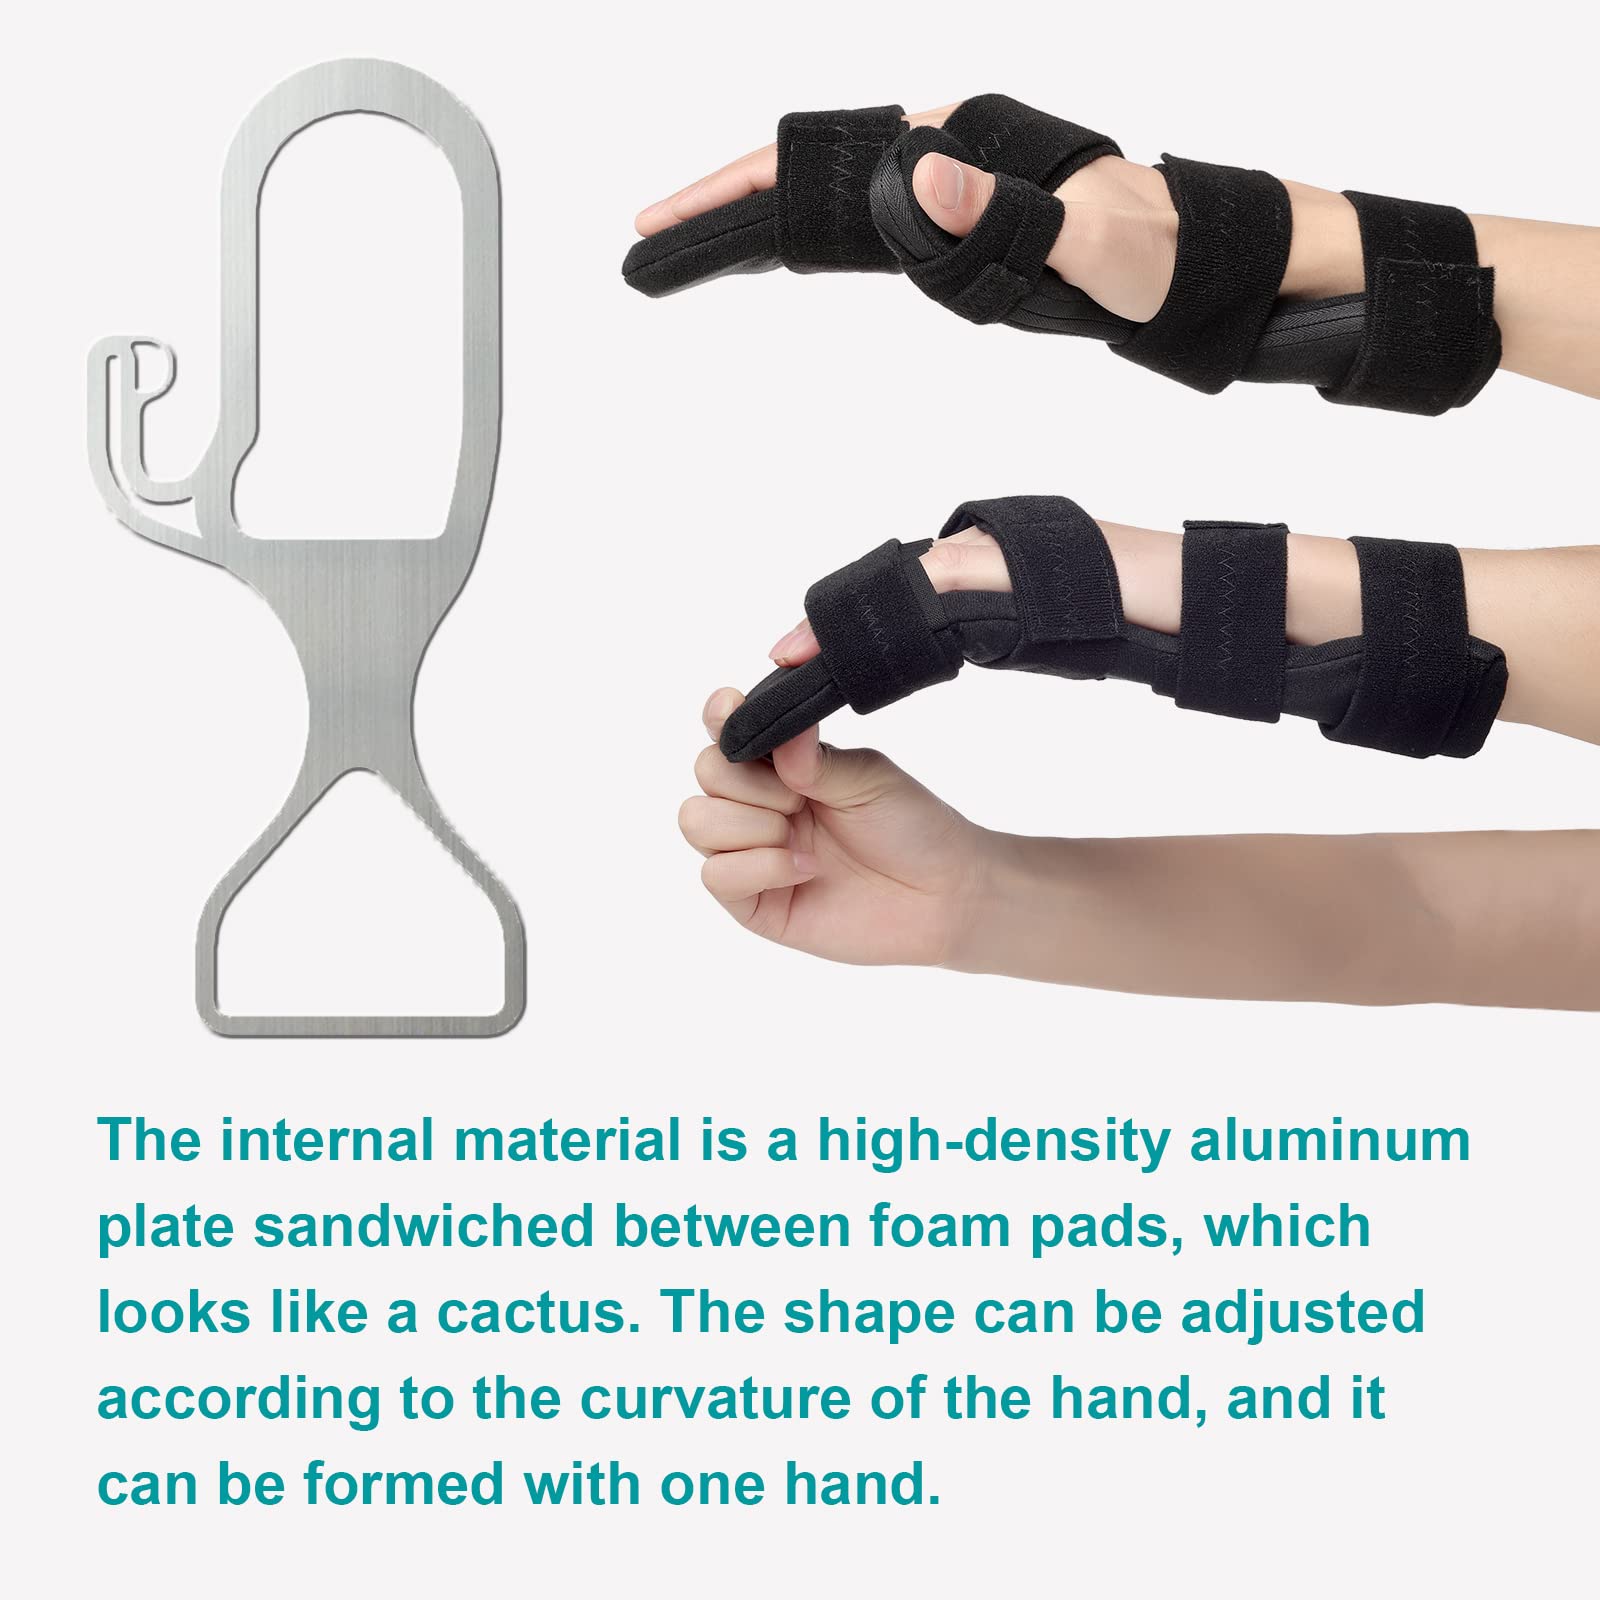 Sylong Stroke Resting Hand Splint Carpal Tunnel Wrist Brace Night Immobilizer, Finger Stabilizer Wrap - for Muscle Atrophy Rehabilitation, Arthritis, Tendonitis, Carpal Tunnel Pain